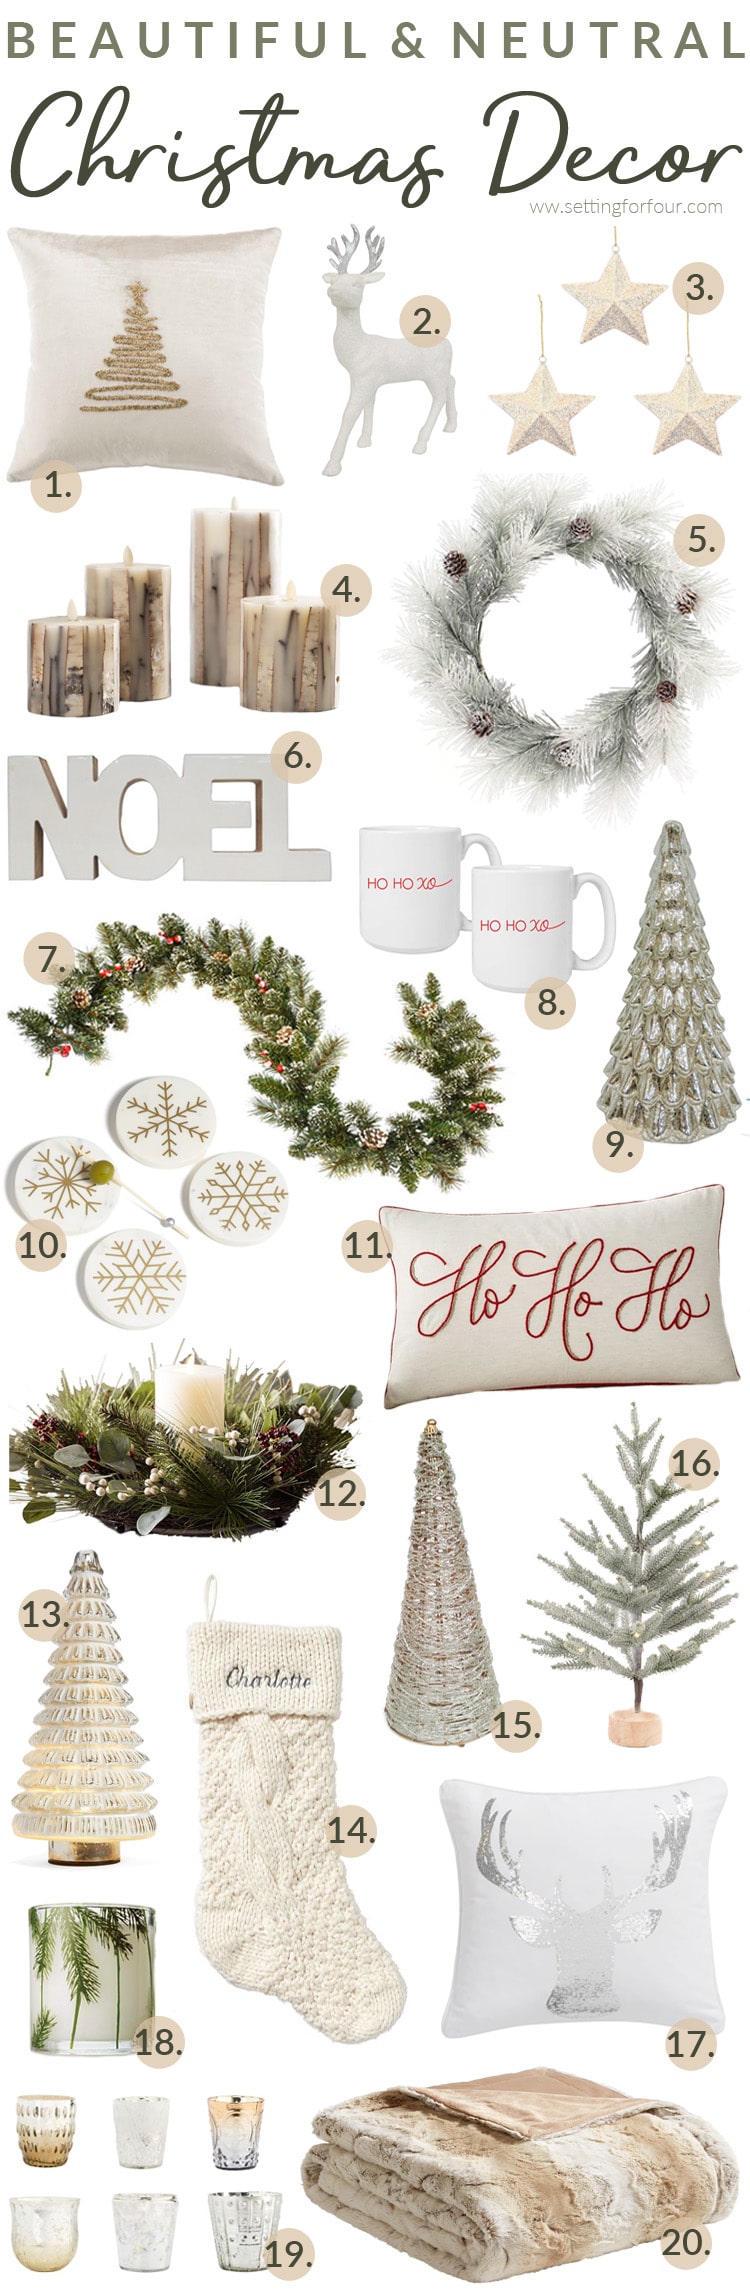 Beautiful & Neutral Christmas Decor Ideas For The Home #neutral #elegant #christmasdecor #christmas #christmastree #christmaswreath #christmasgarland #holidaydecor